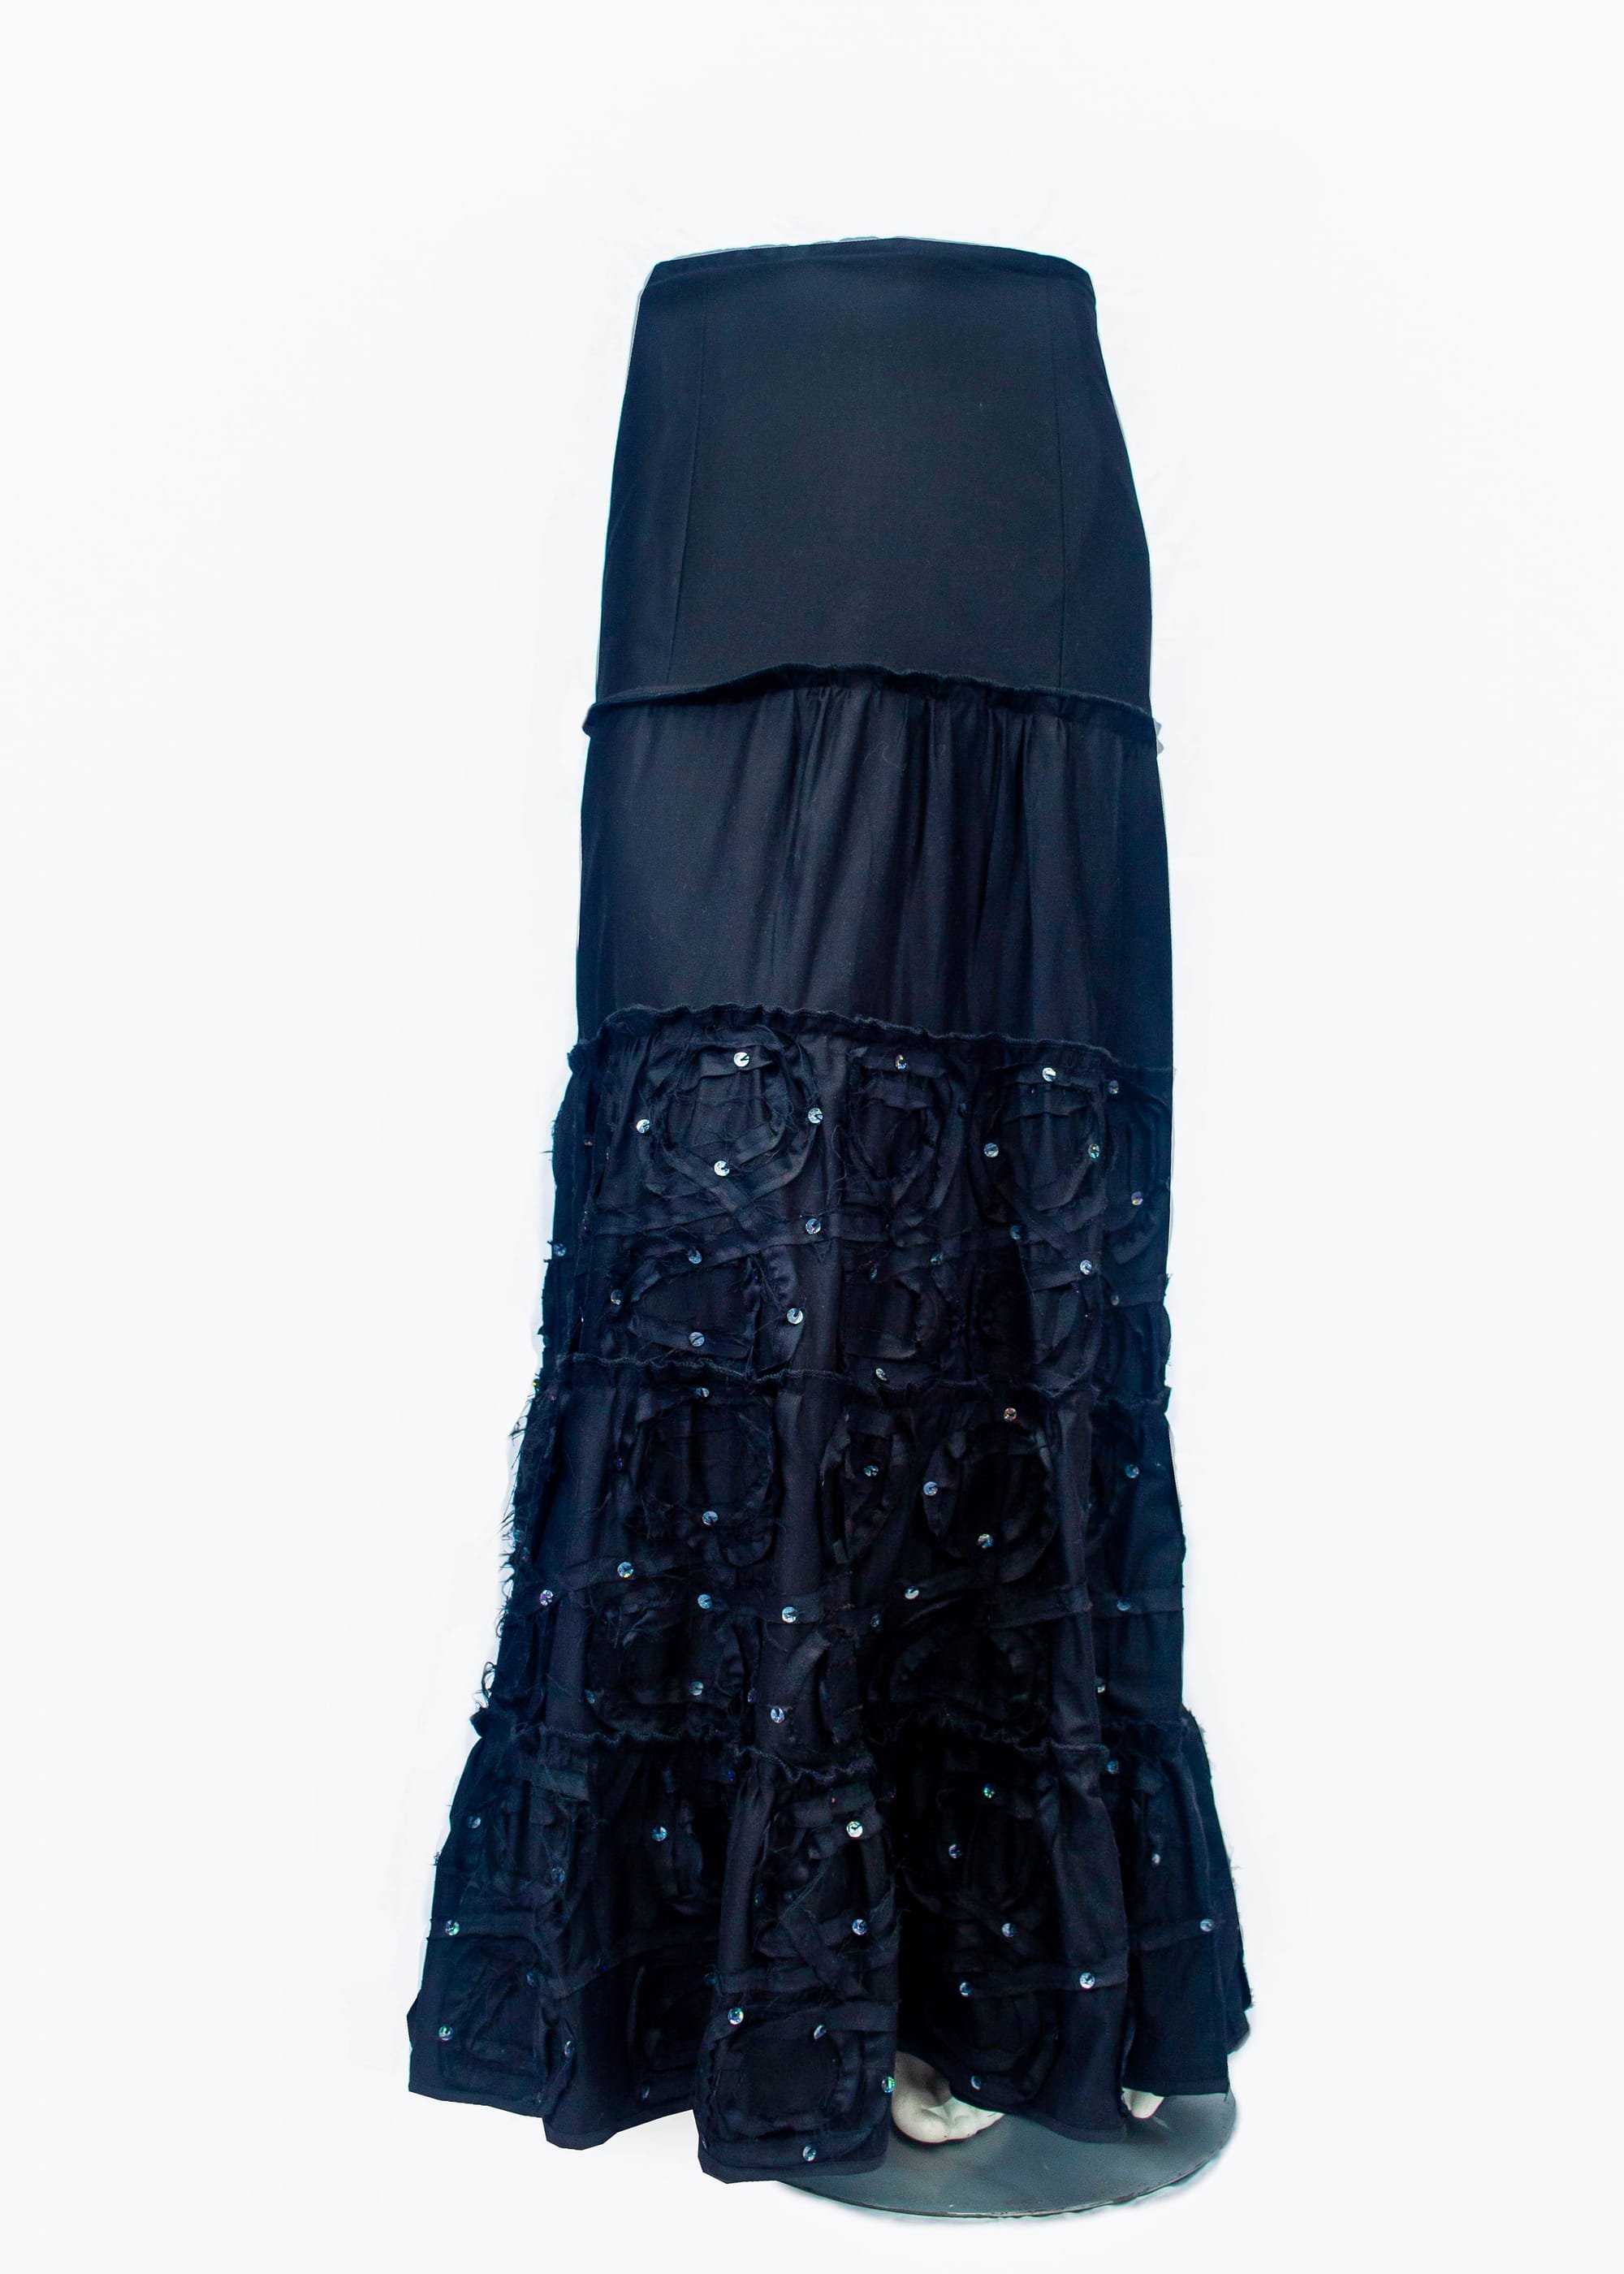 Black Cotton Savana Gypsy Skirt with Sequins